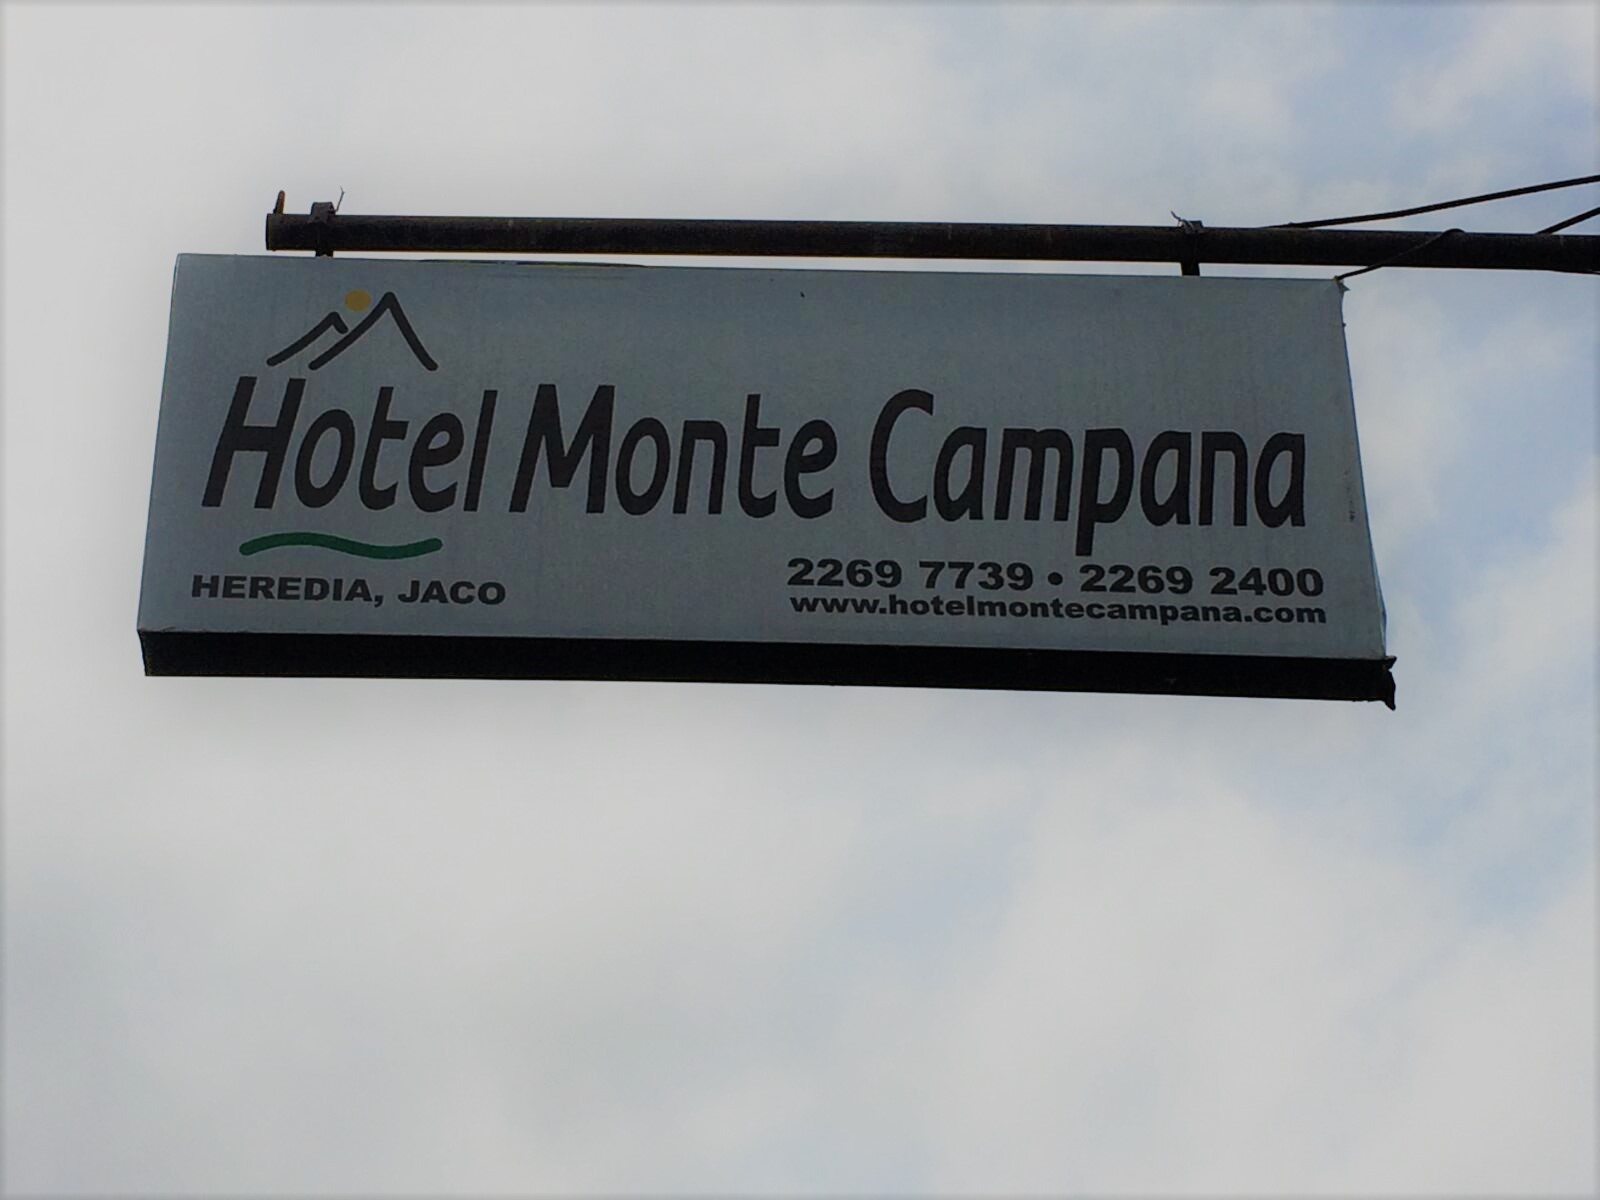 Hotel Monte Campana Jaco